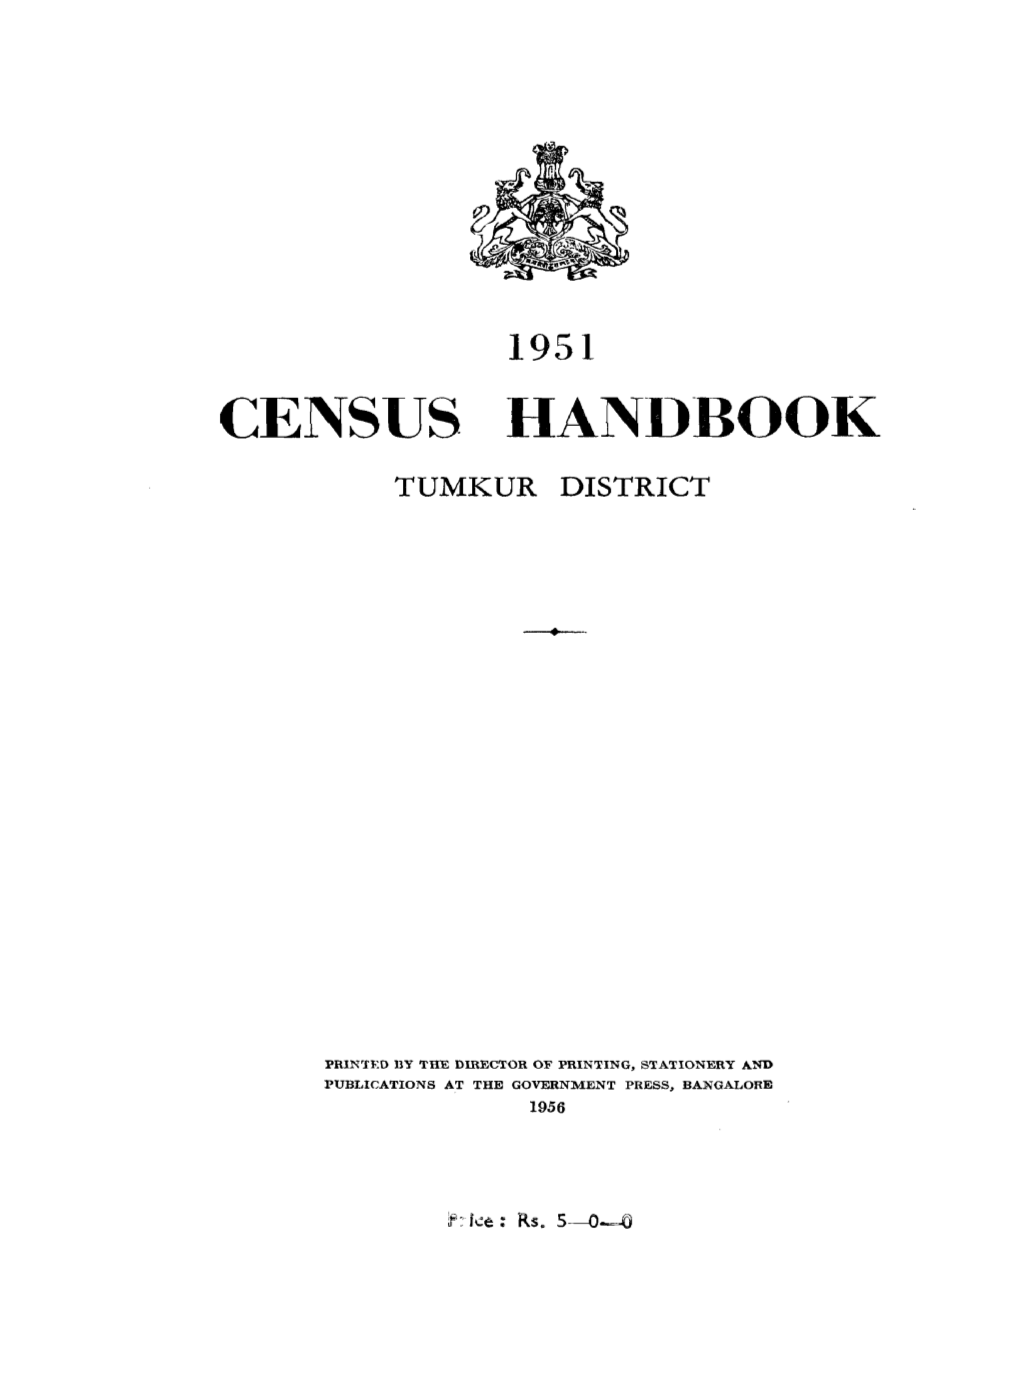 Census Handbook, Tumkur